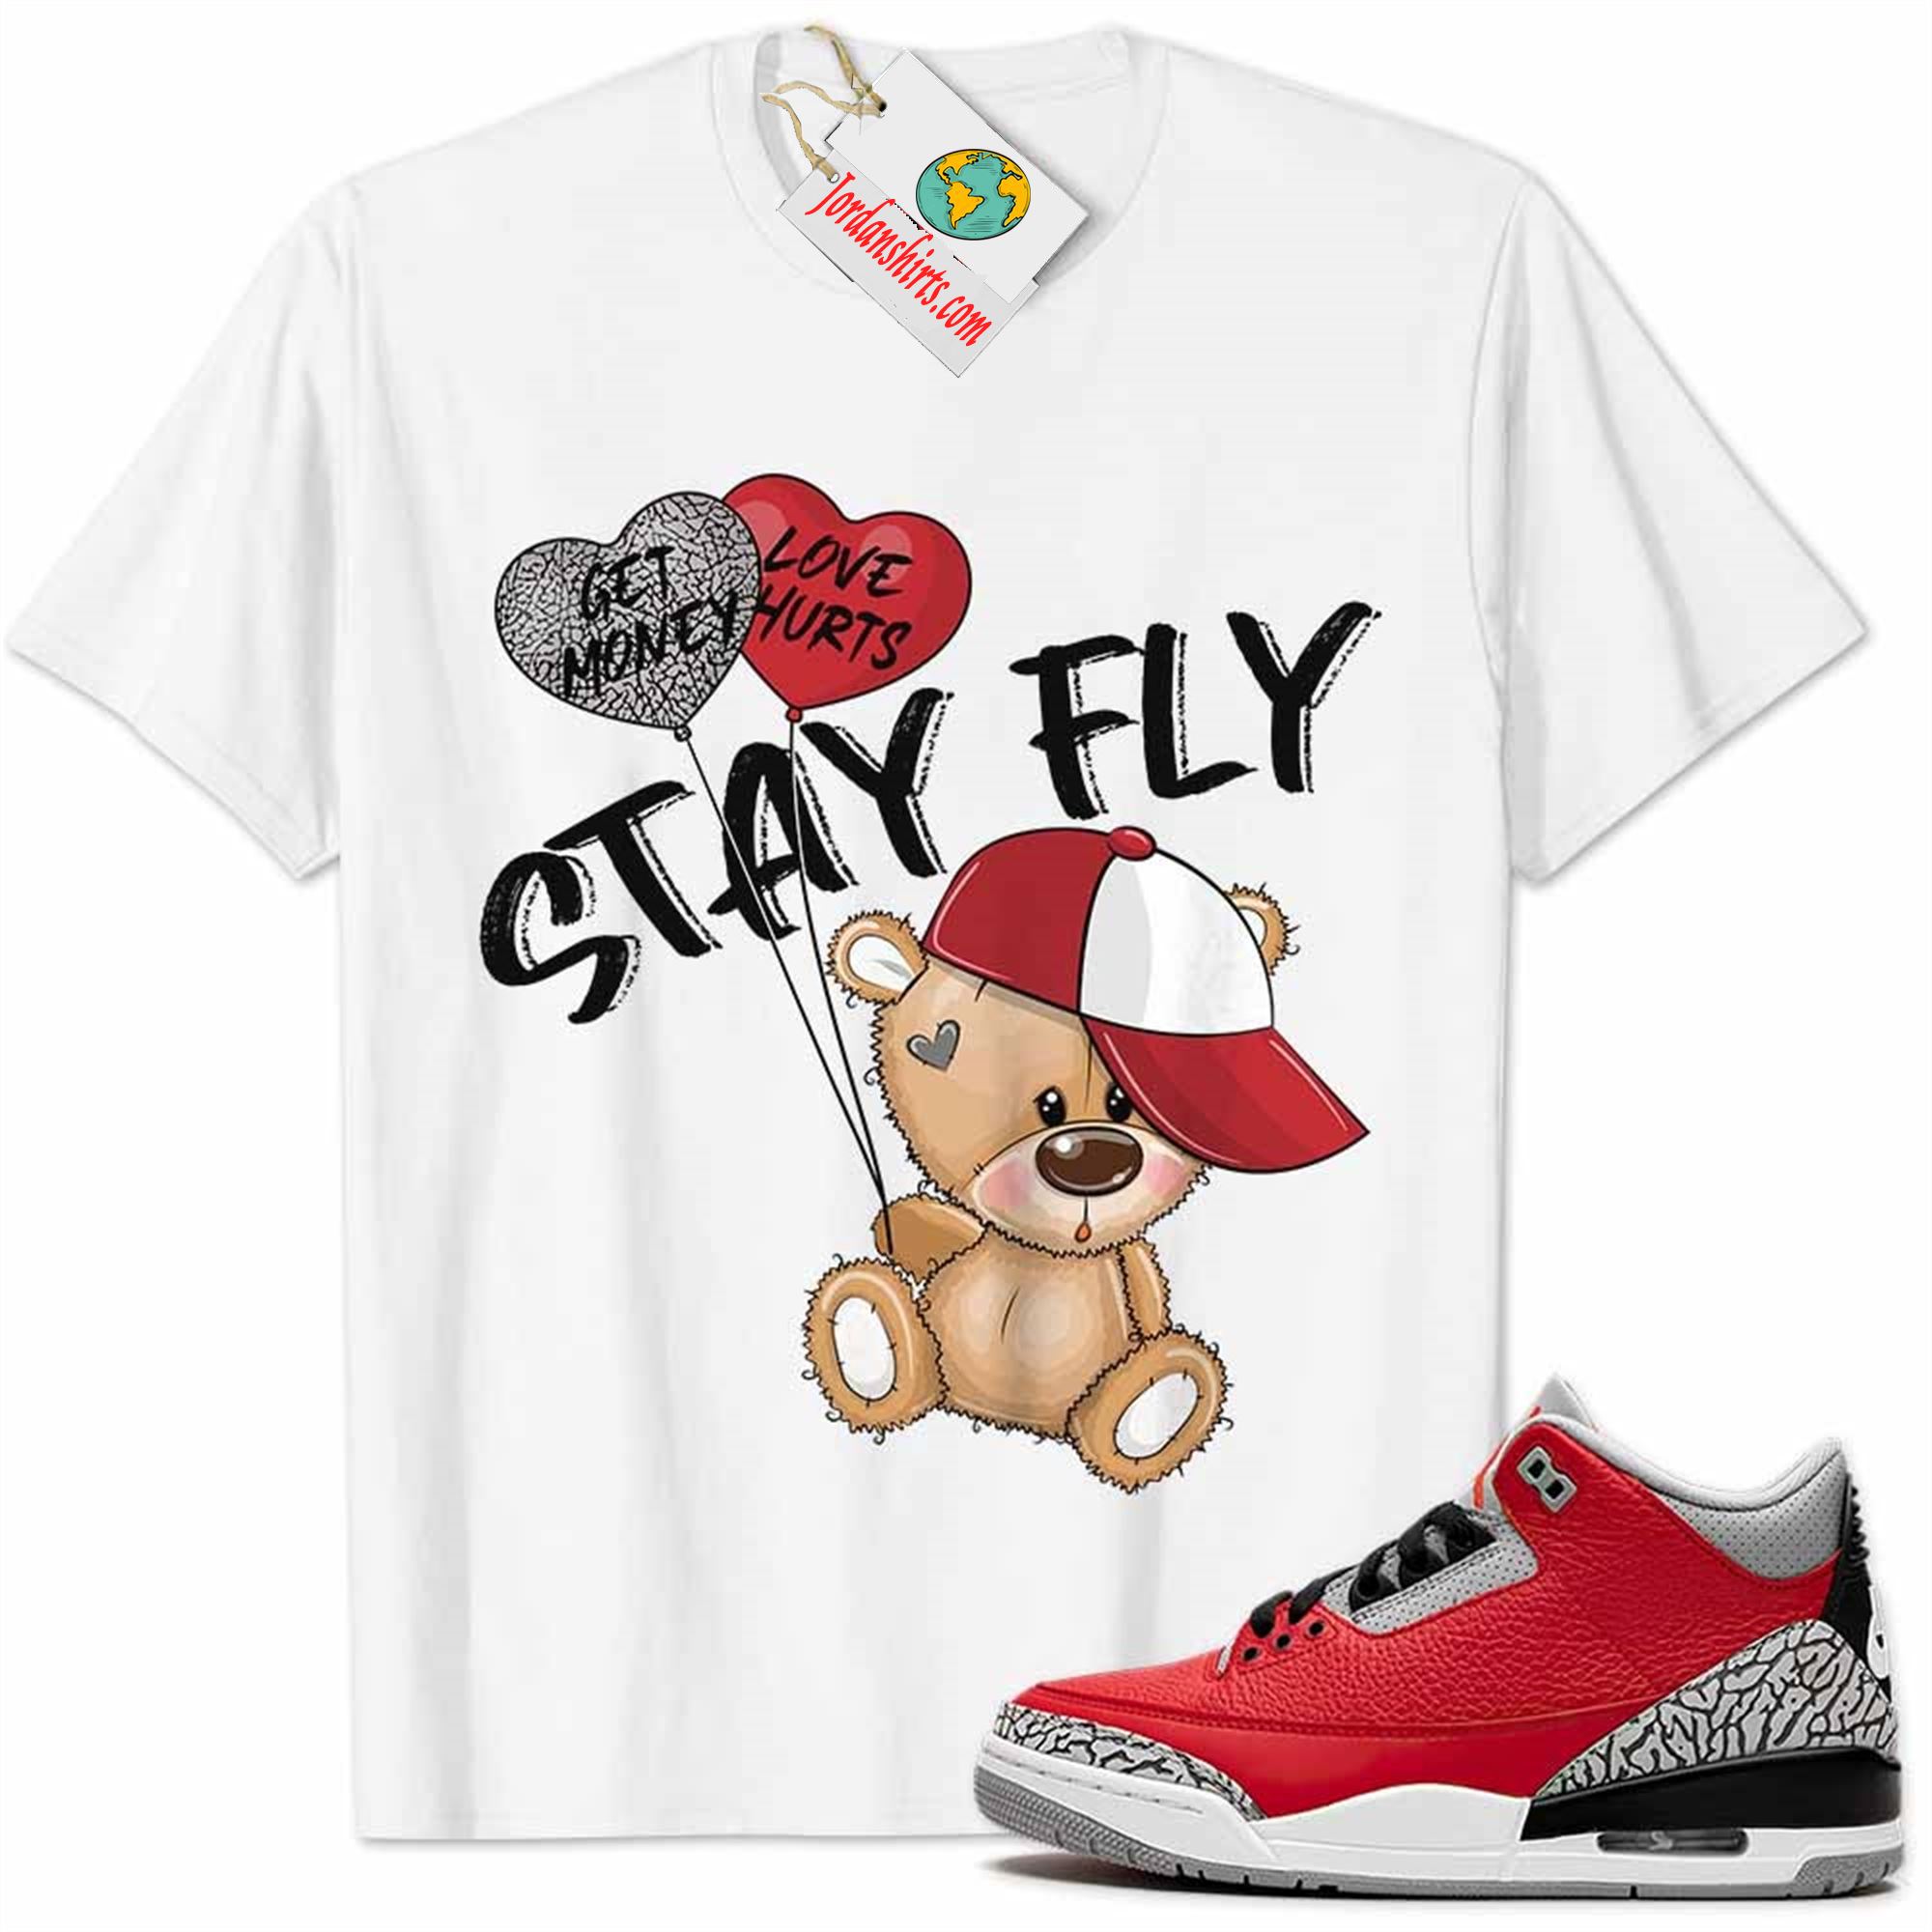 Jordan 3 Shirt, Cement 3s Shirt Cute Teddy Bear Stay Fly Get Money White Size Up To 5xl